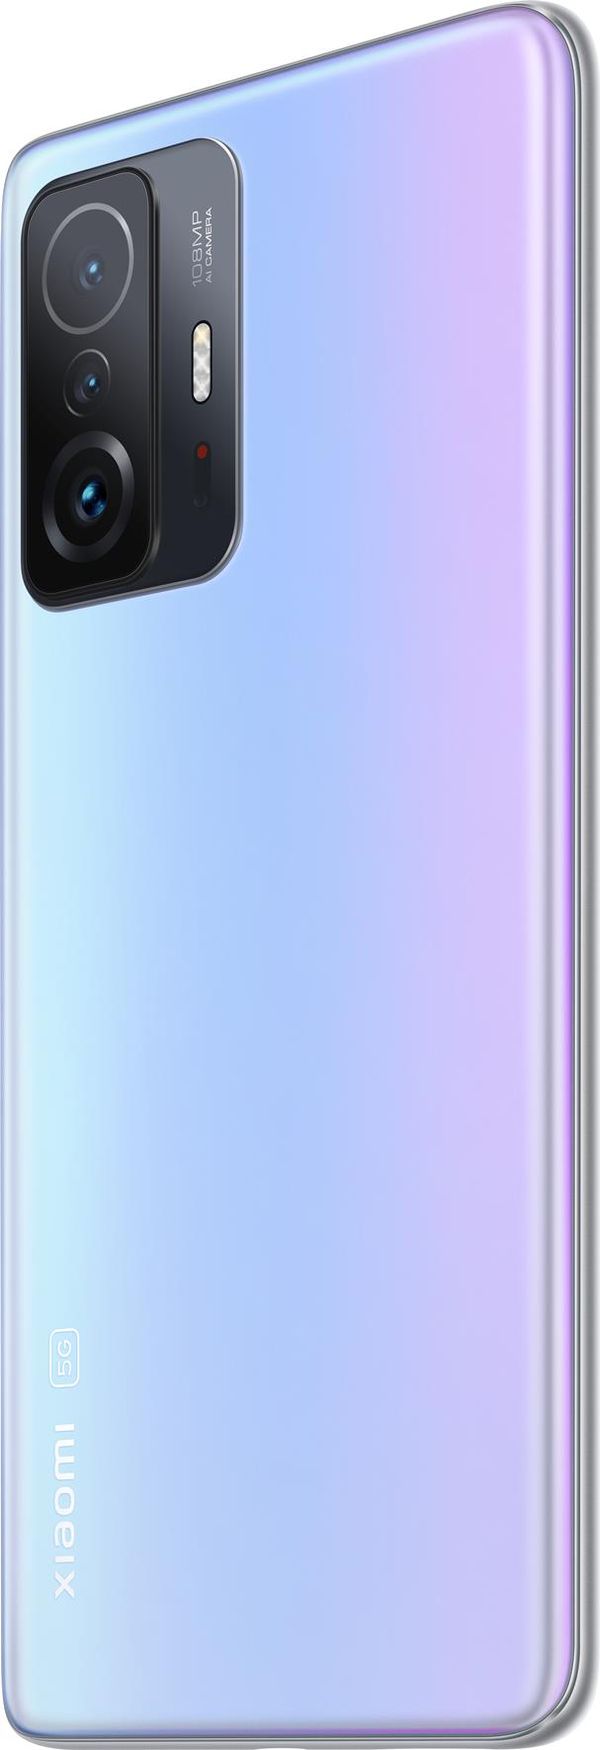 RE-9510K3S40001-PQ smartphone reacondicionado xiaomi 11t pro 8gb ram 128gb rom blue grado a